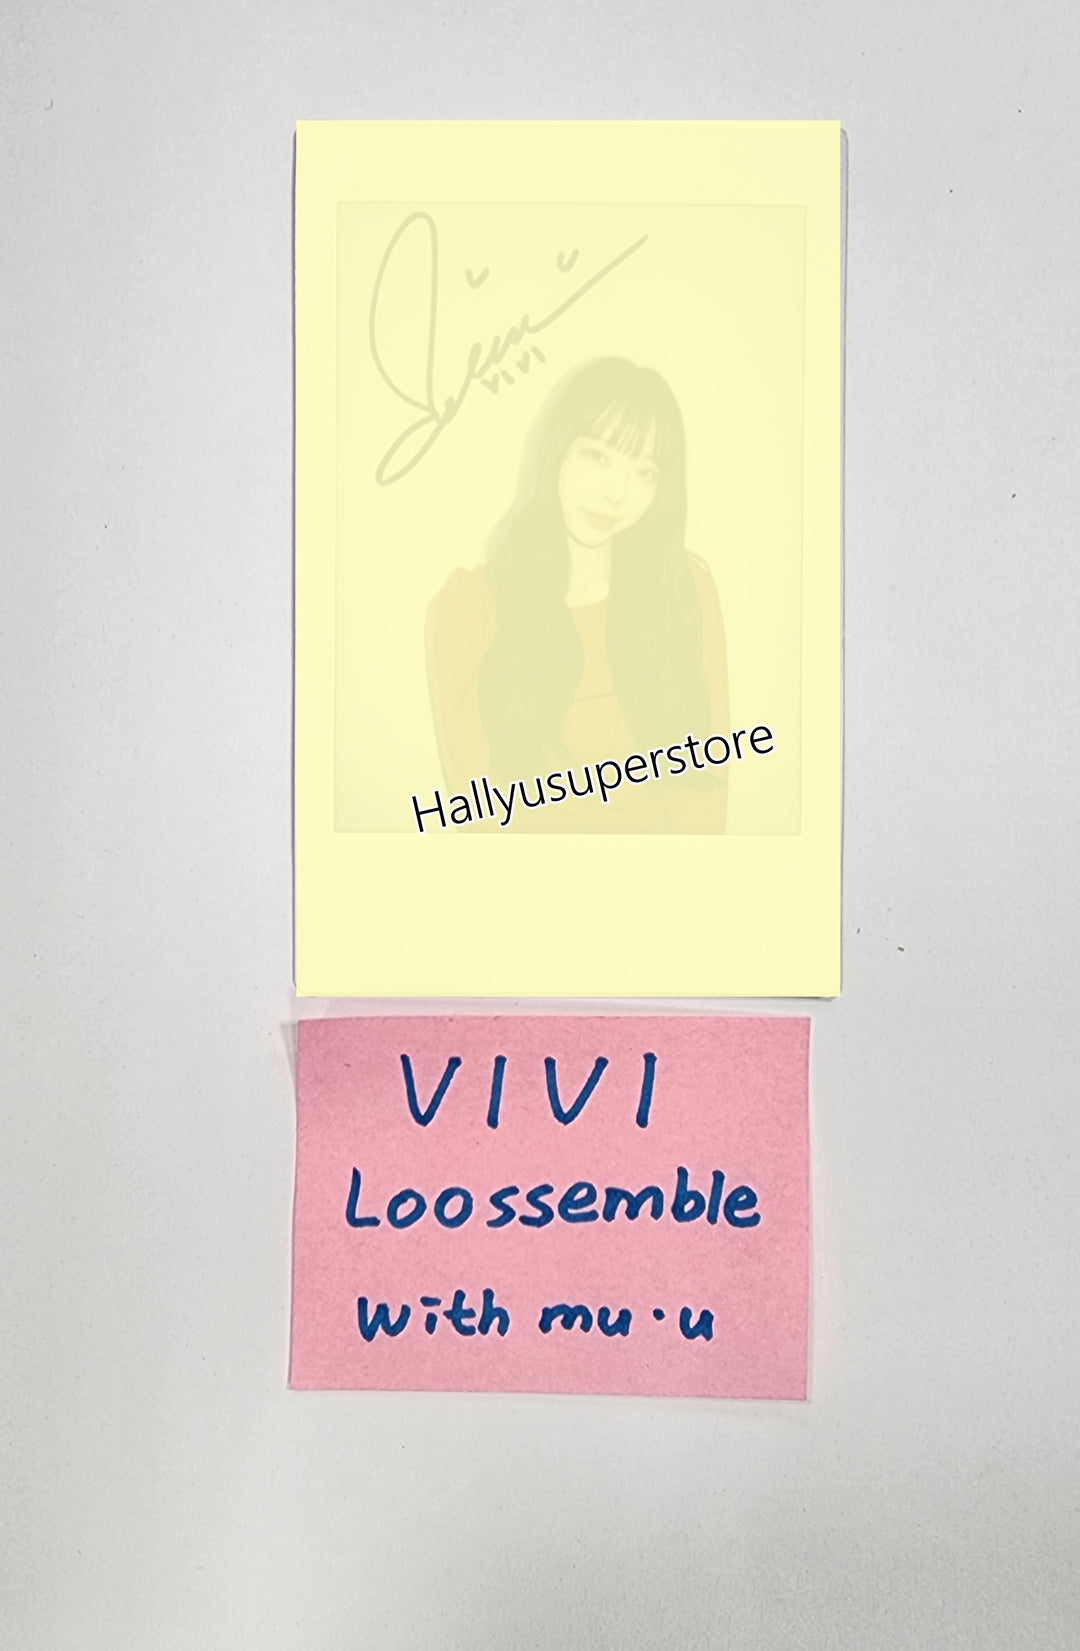 Vivi (Of Loossemble) "Loossemble" - Hand Autographed(Signed) Polaroid